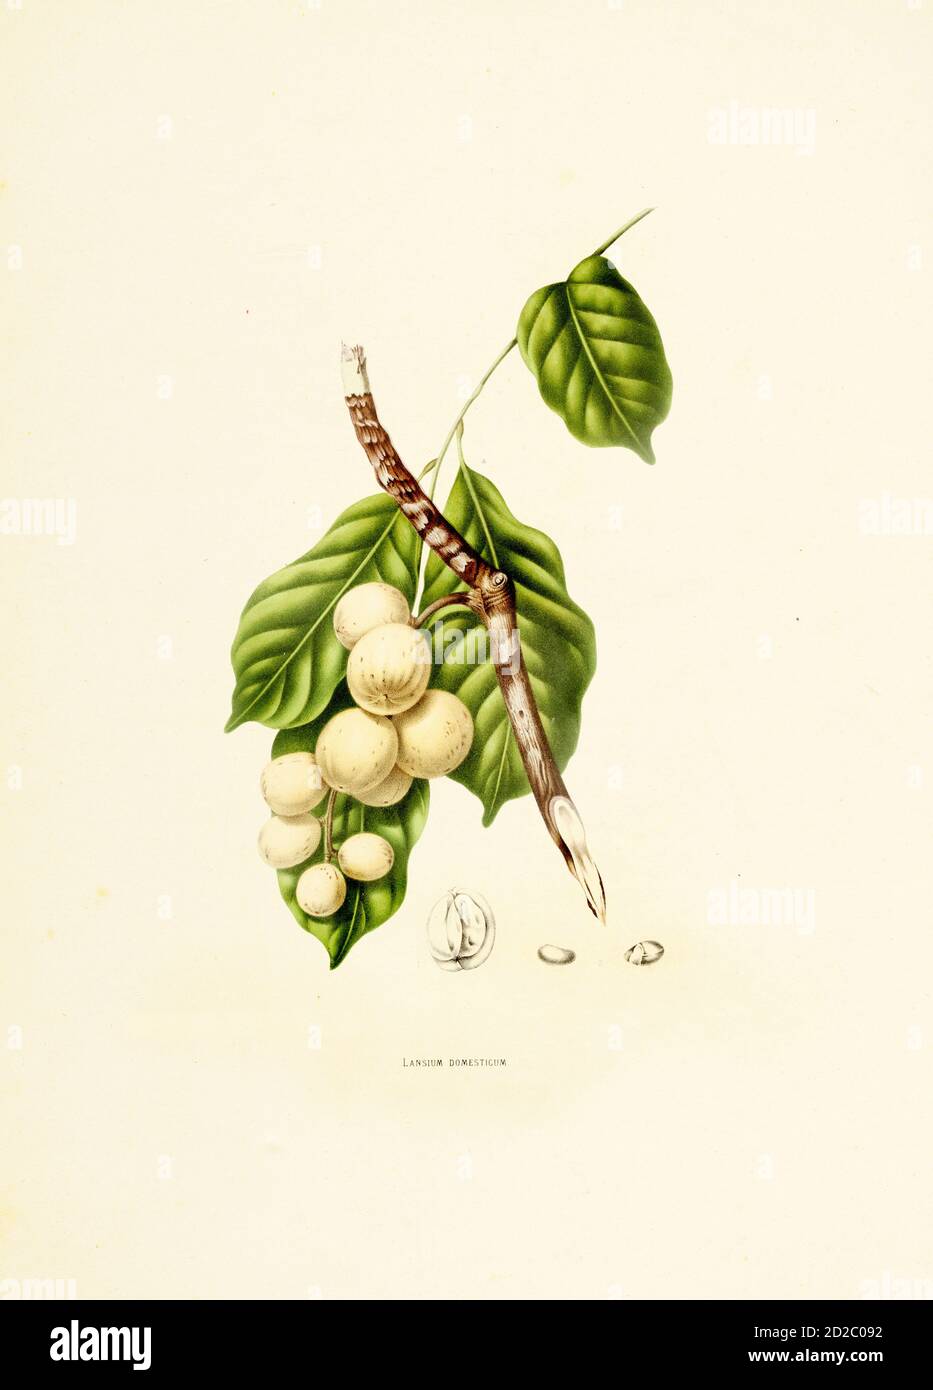 19th-century illustration of fruits of lansium domesticum, also known as langsat. Engraving by Berthe Hoola van Nooten Stock Photo